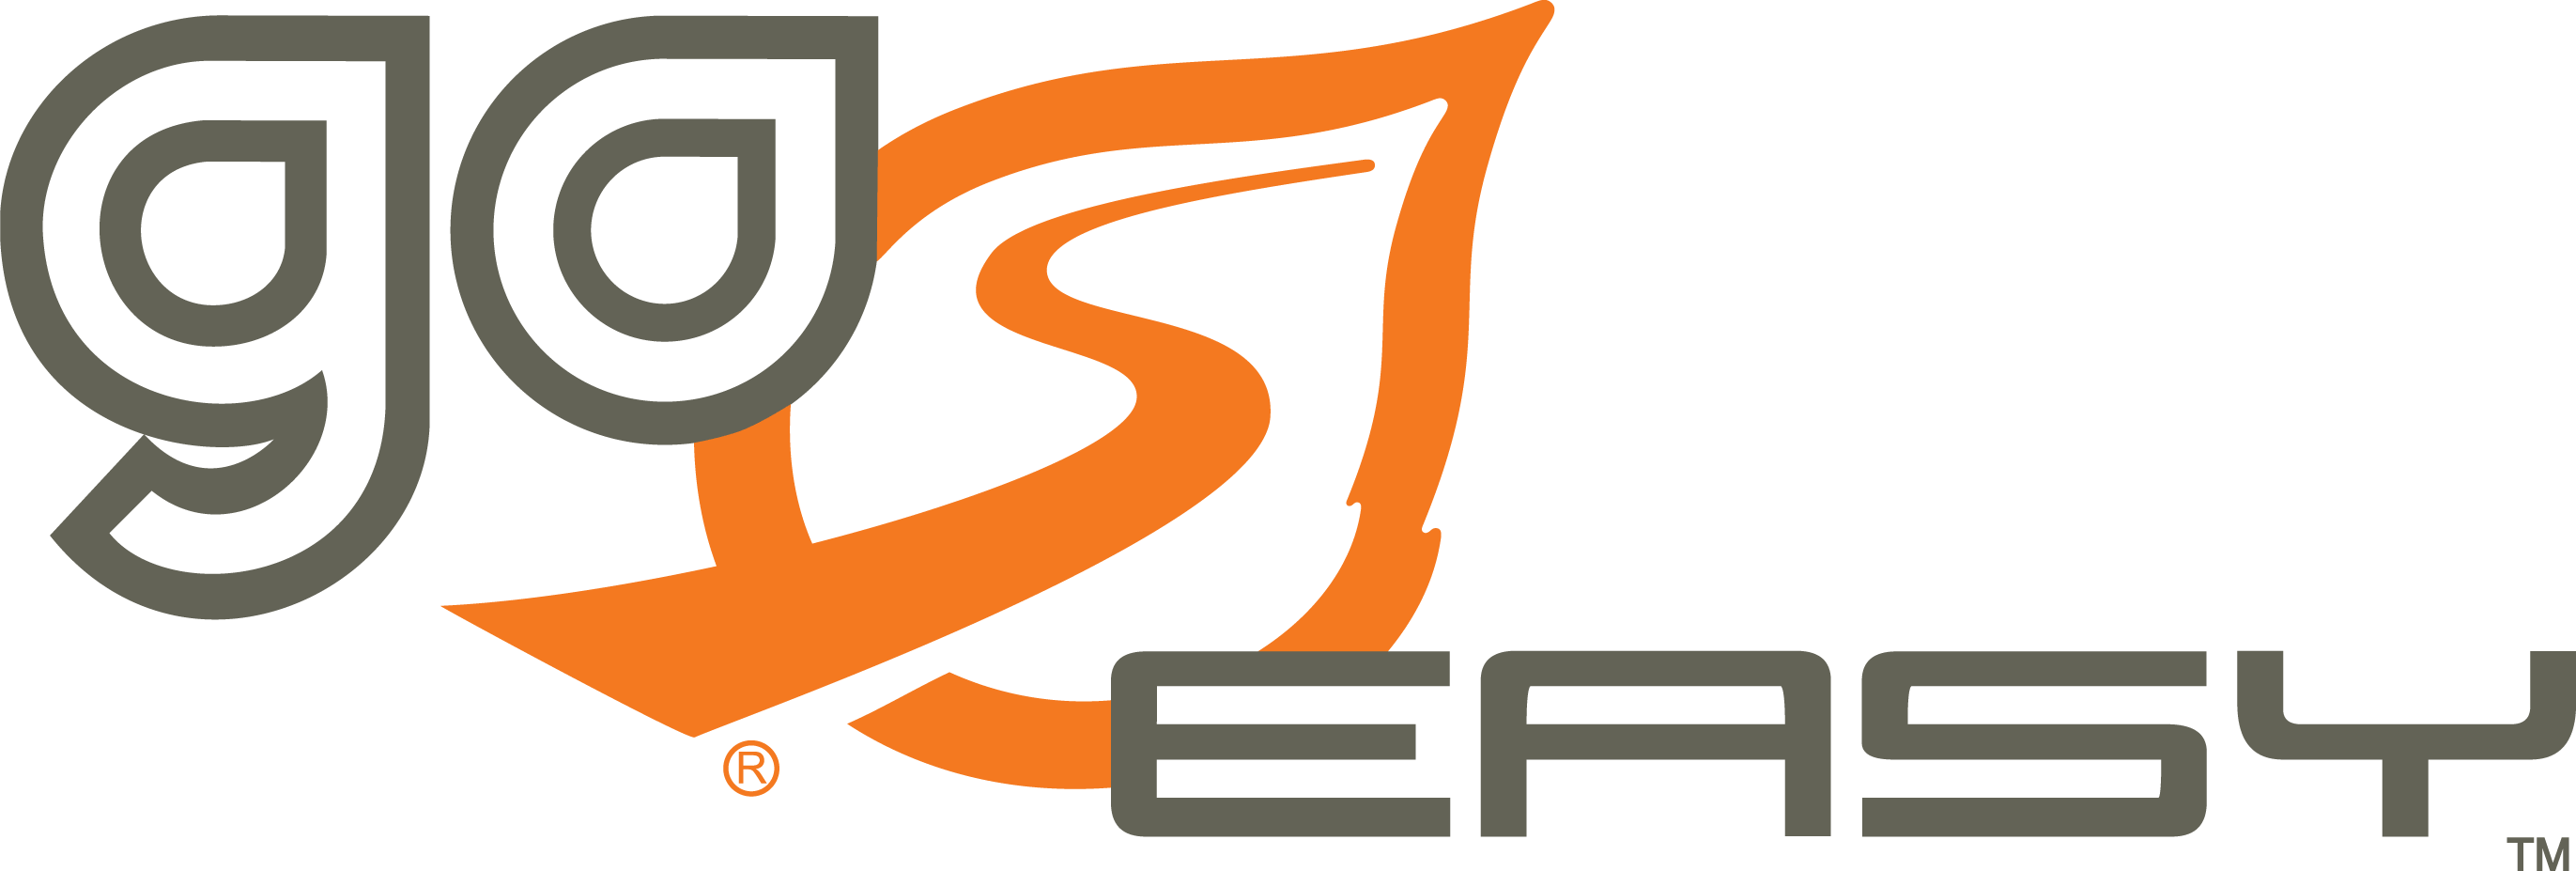 Go Easy Logo Full Color - Sylvan Sport (2743x927)